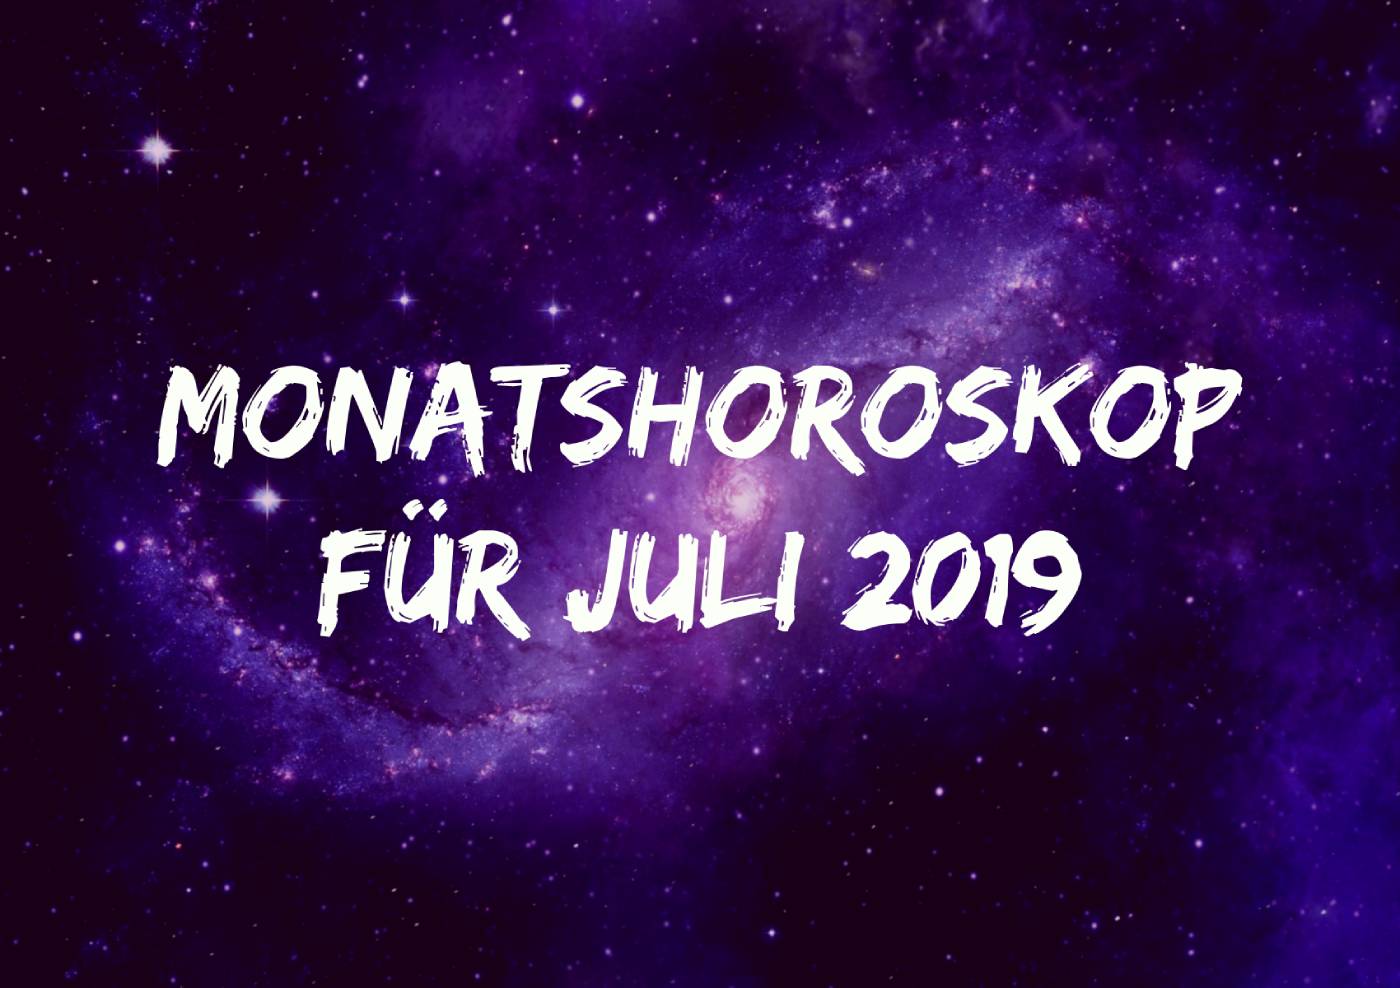 Monatshoroskop für Juli 2019